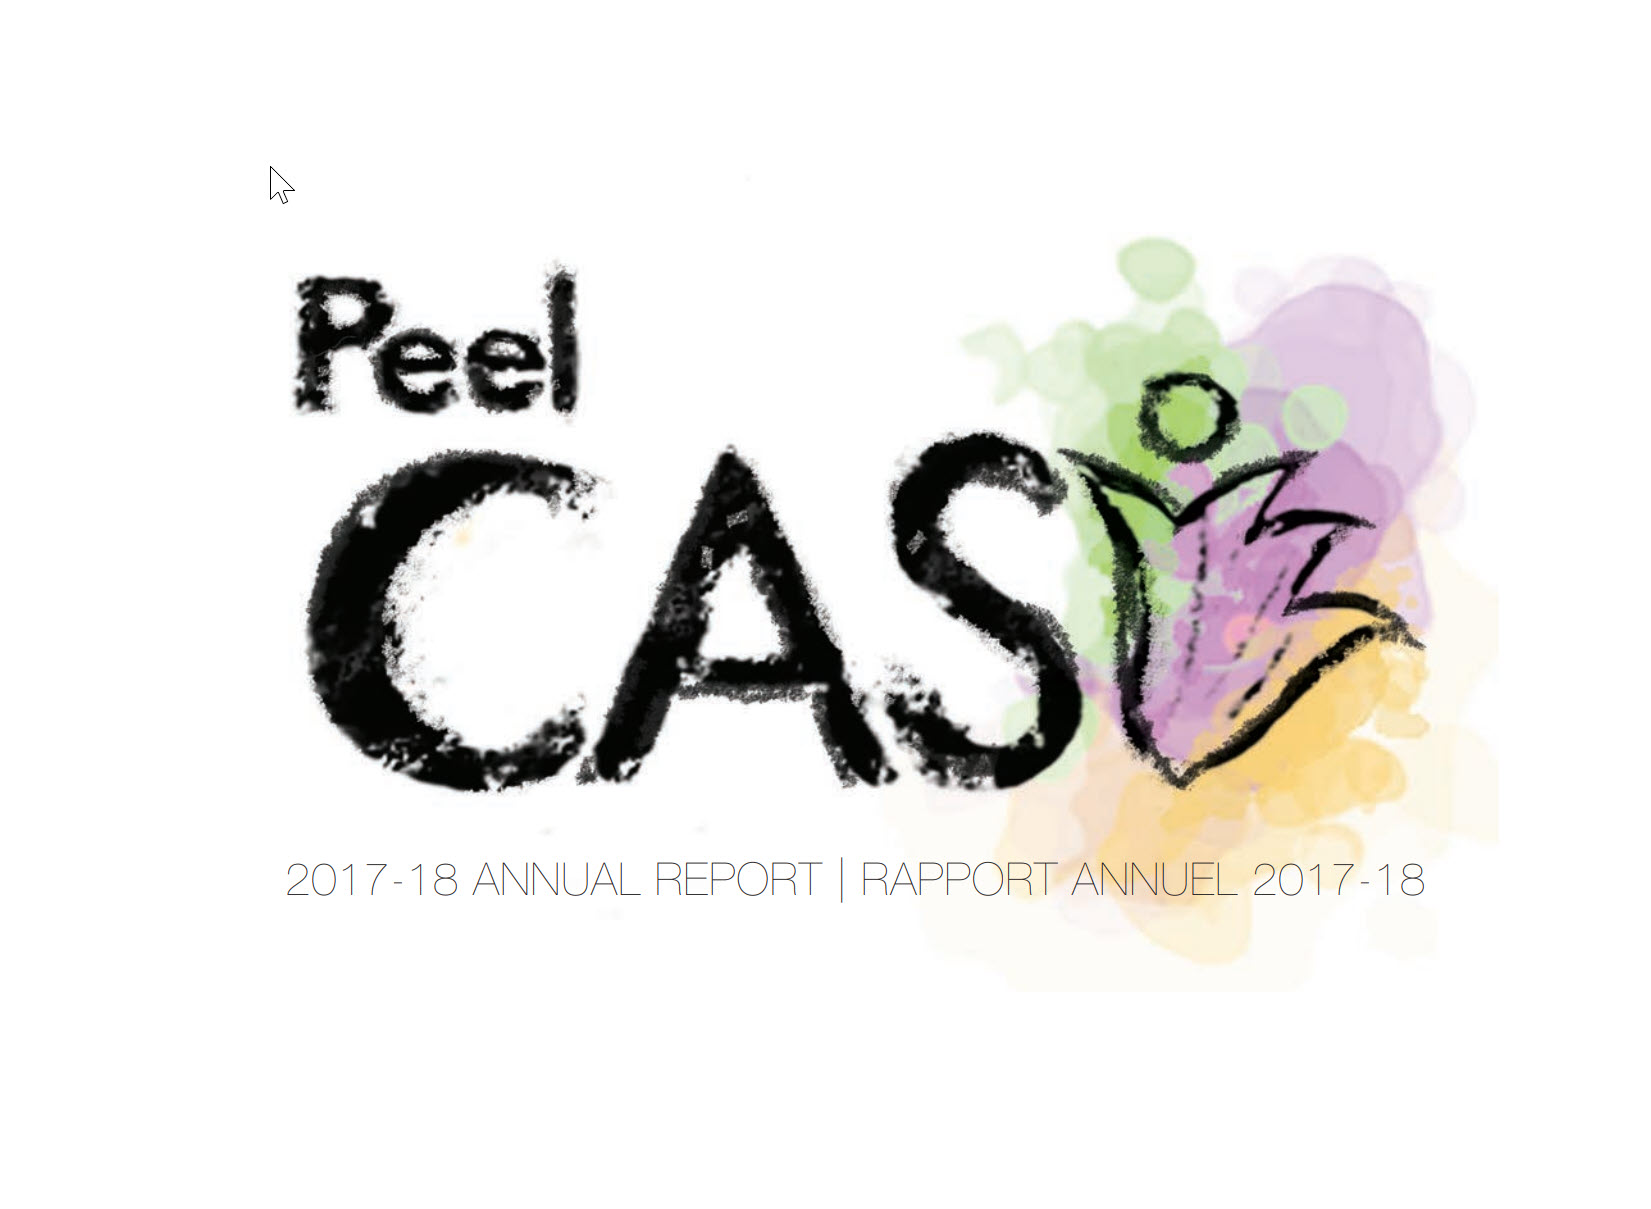 2017-18 Annual Report cover